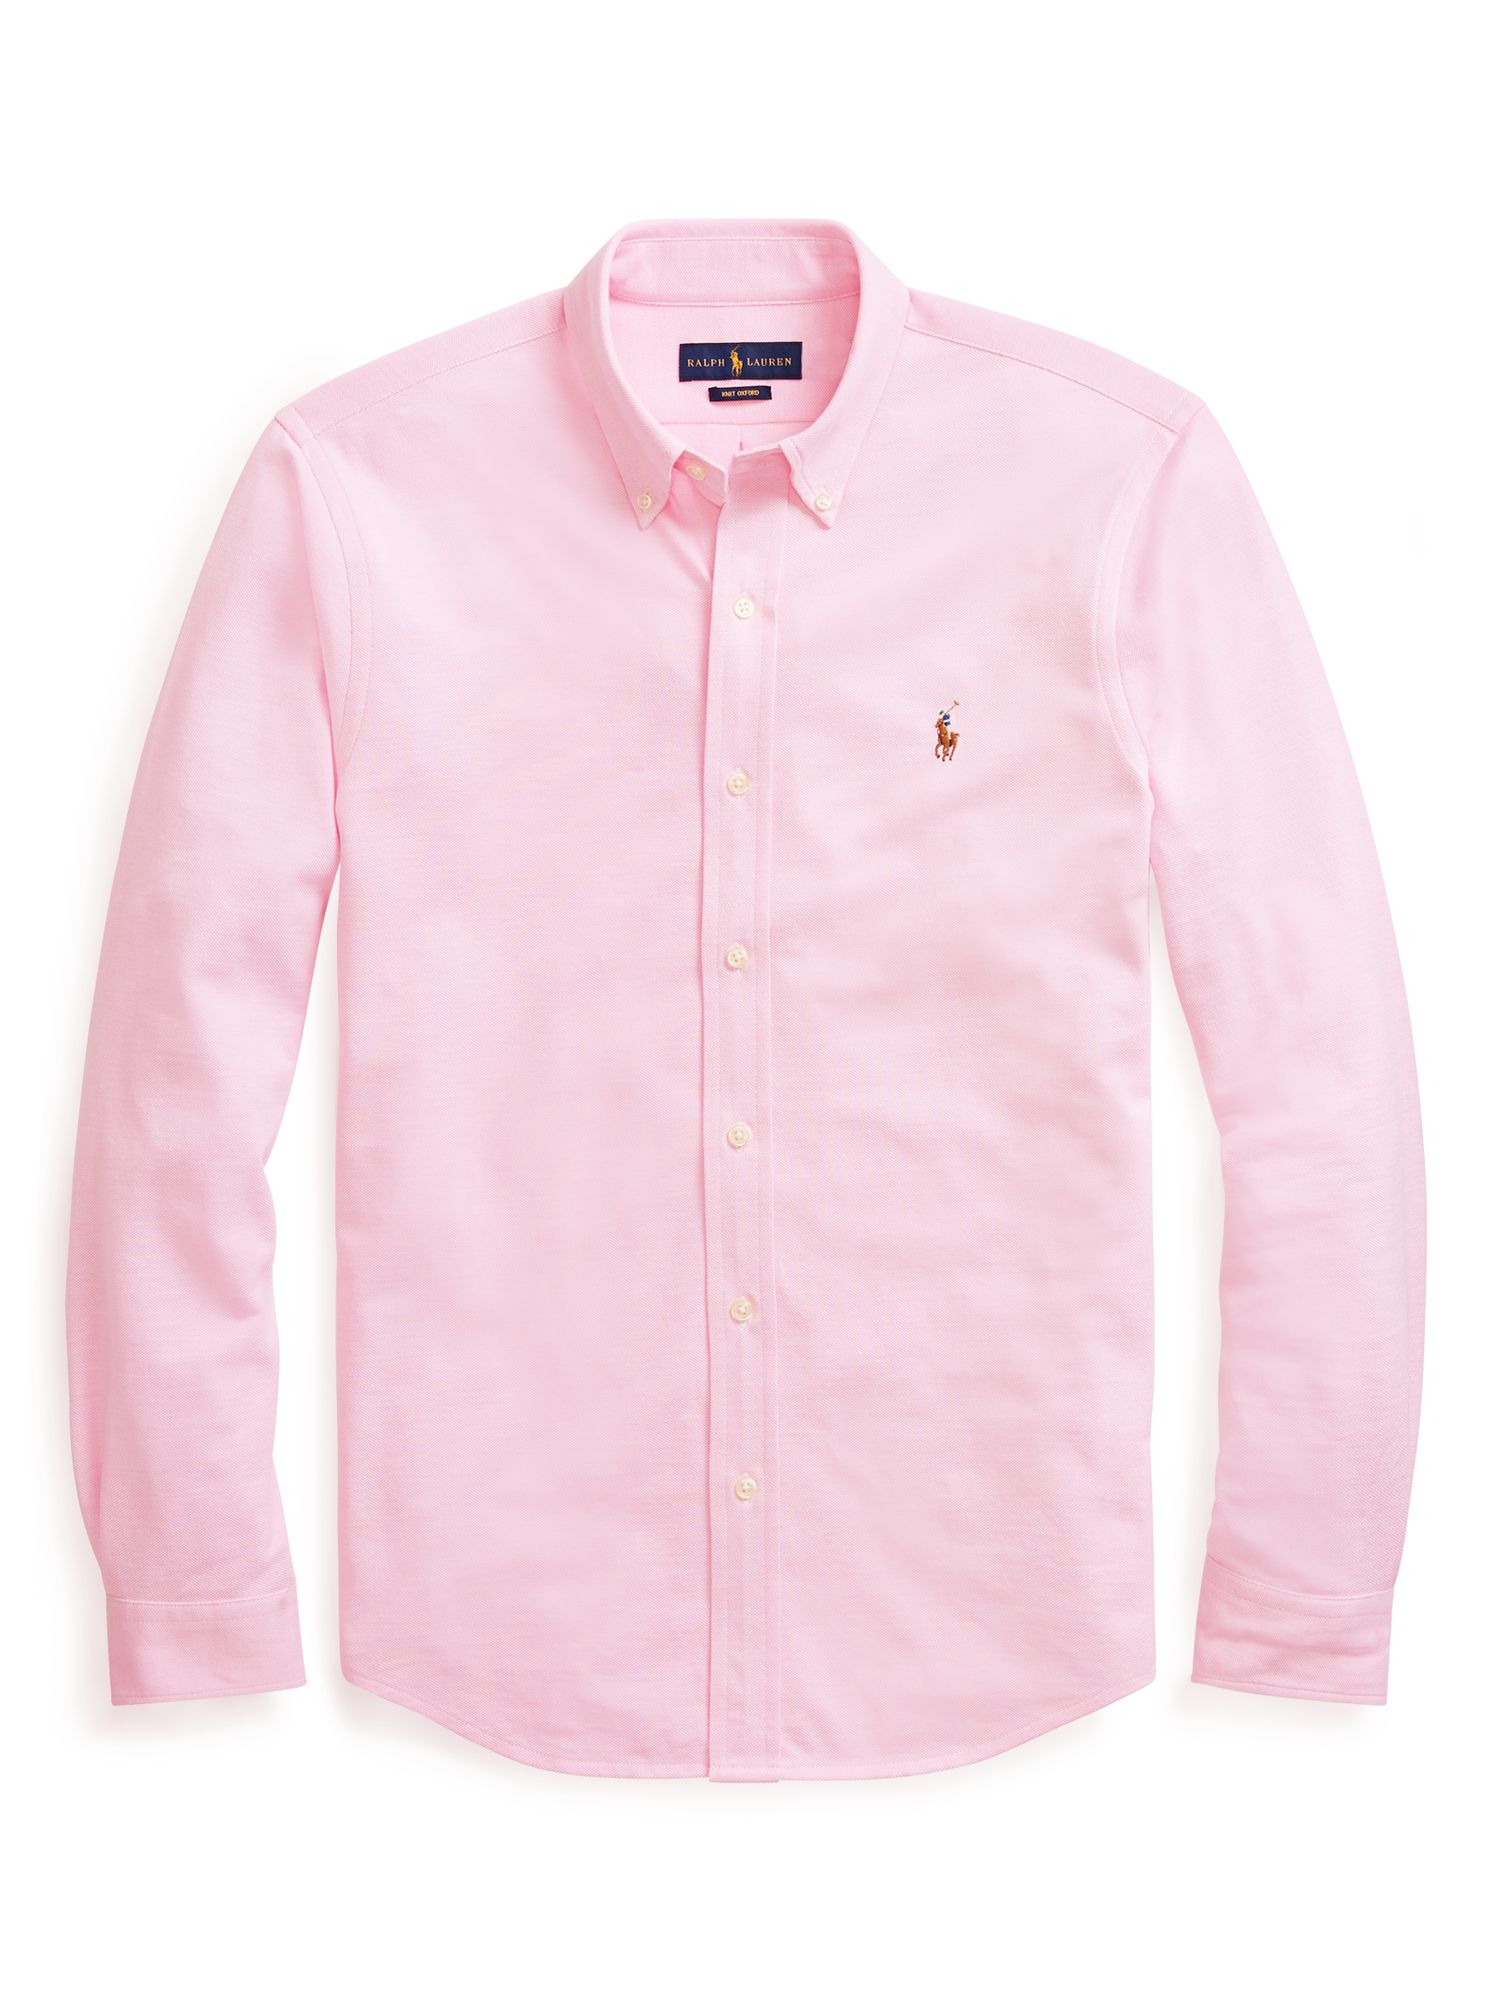 pink polo oxford shirt